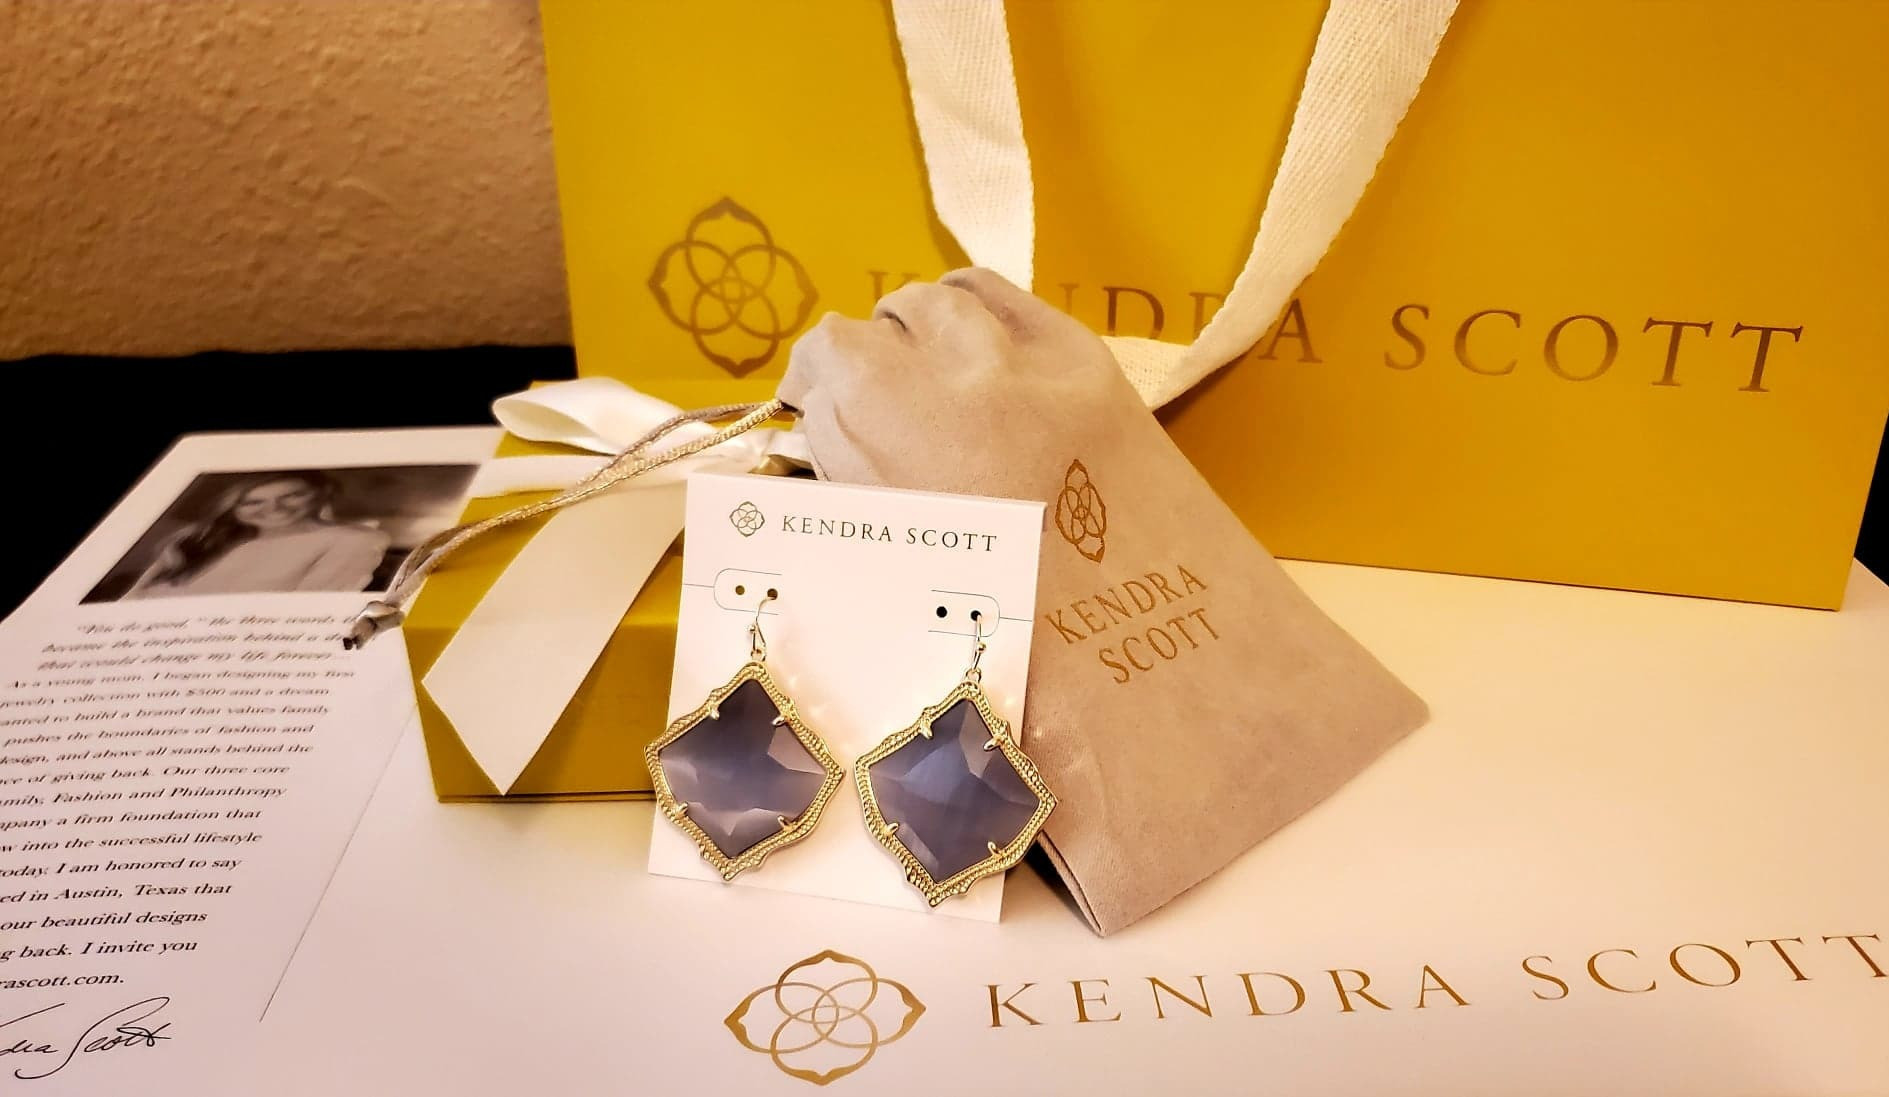 Beautiful Kendra Scott designer earrings in gold with purple gem stones.